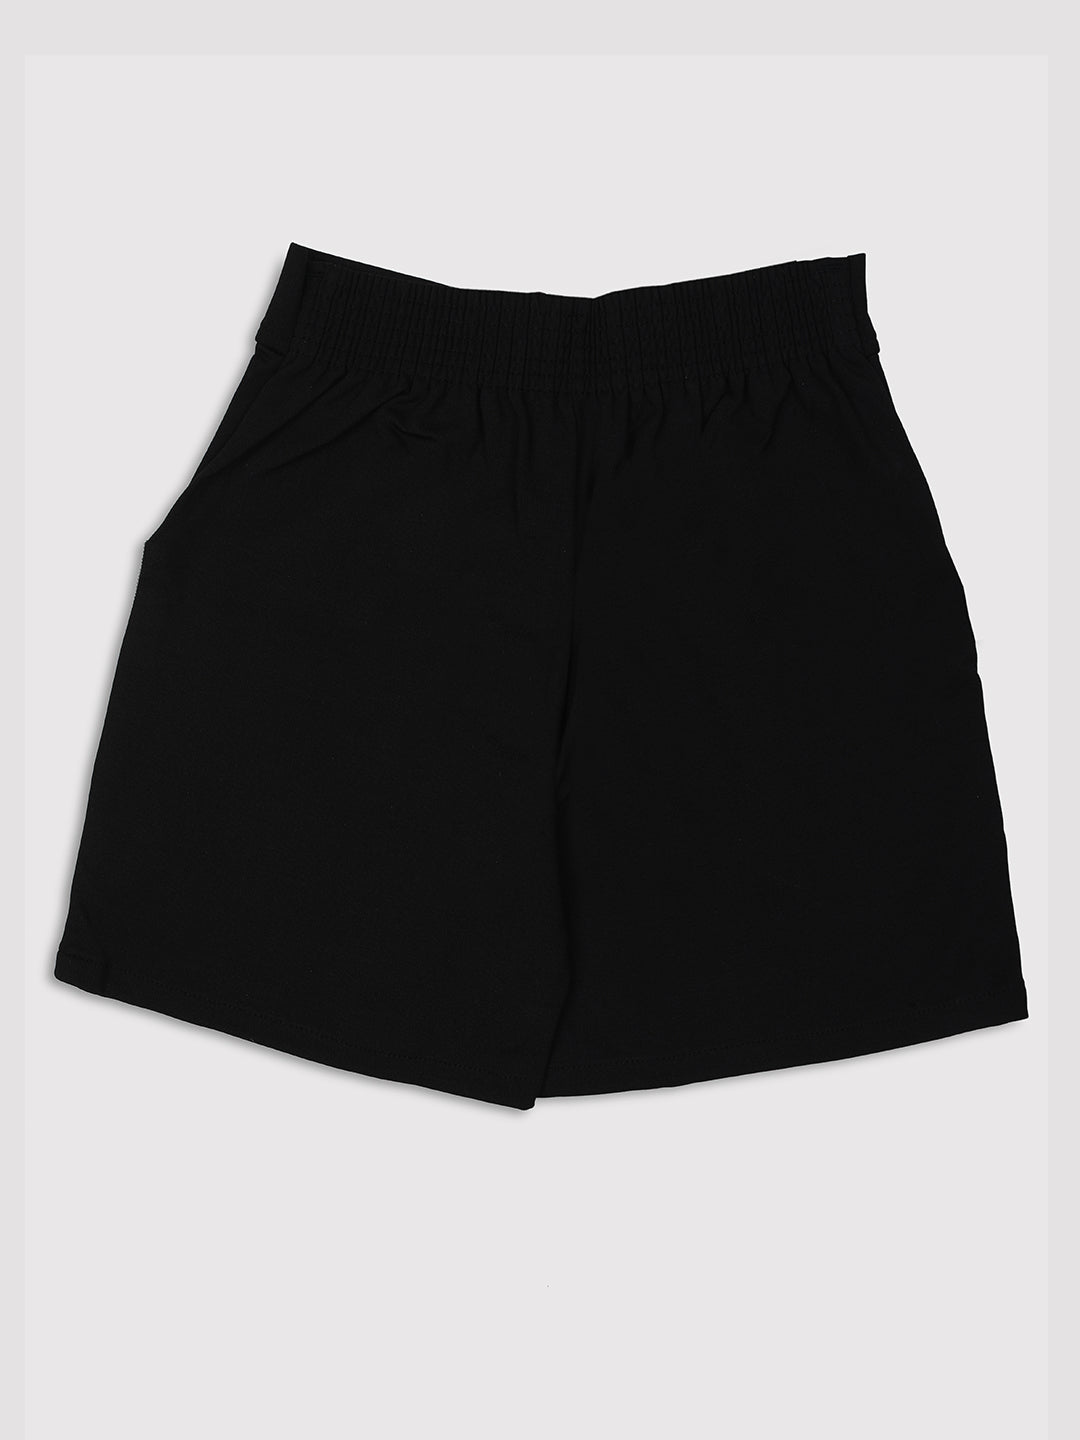 Ziama Girls Stylish Solid Shorts-Black